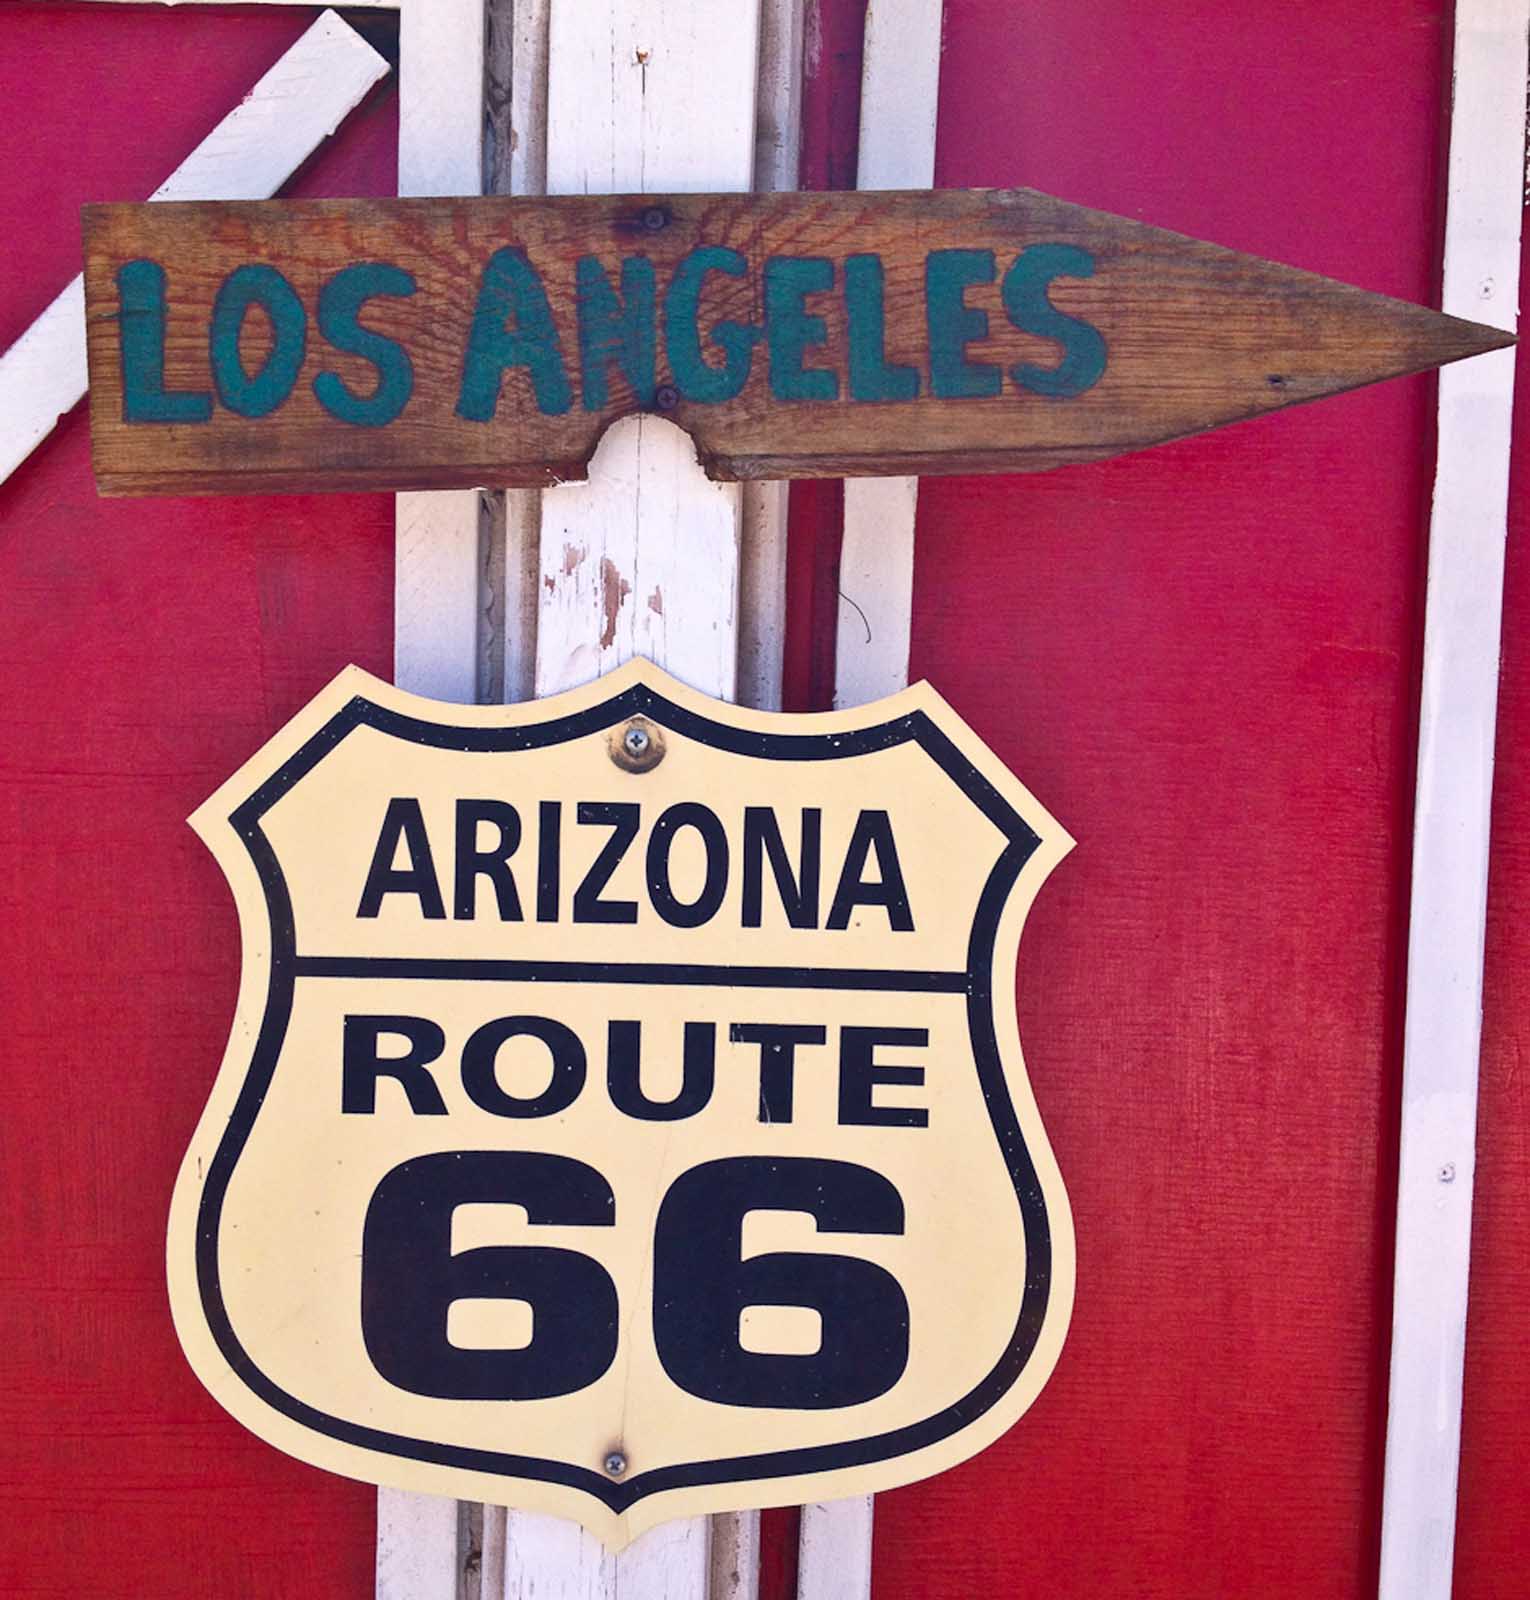 oad trip route 66 arizona sign